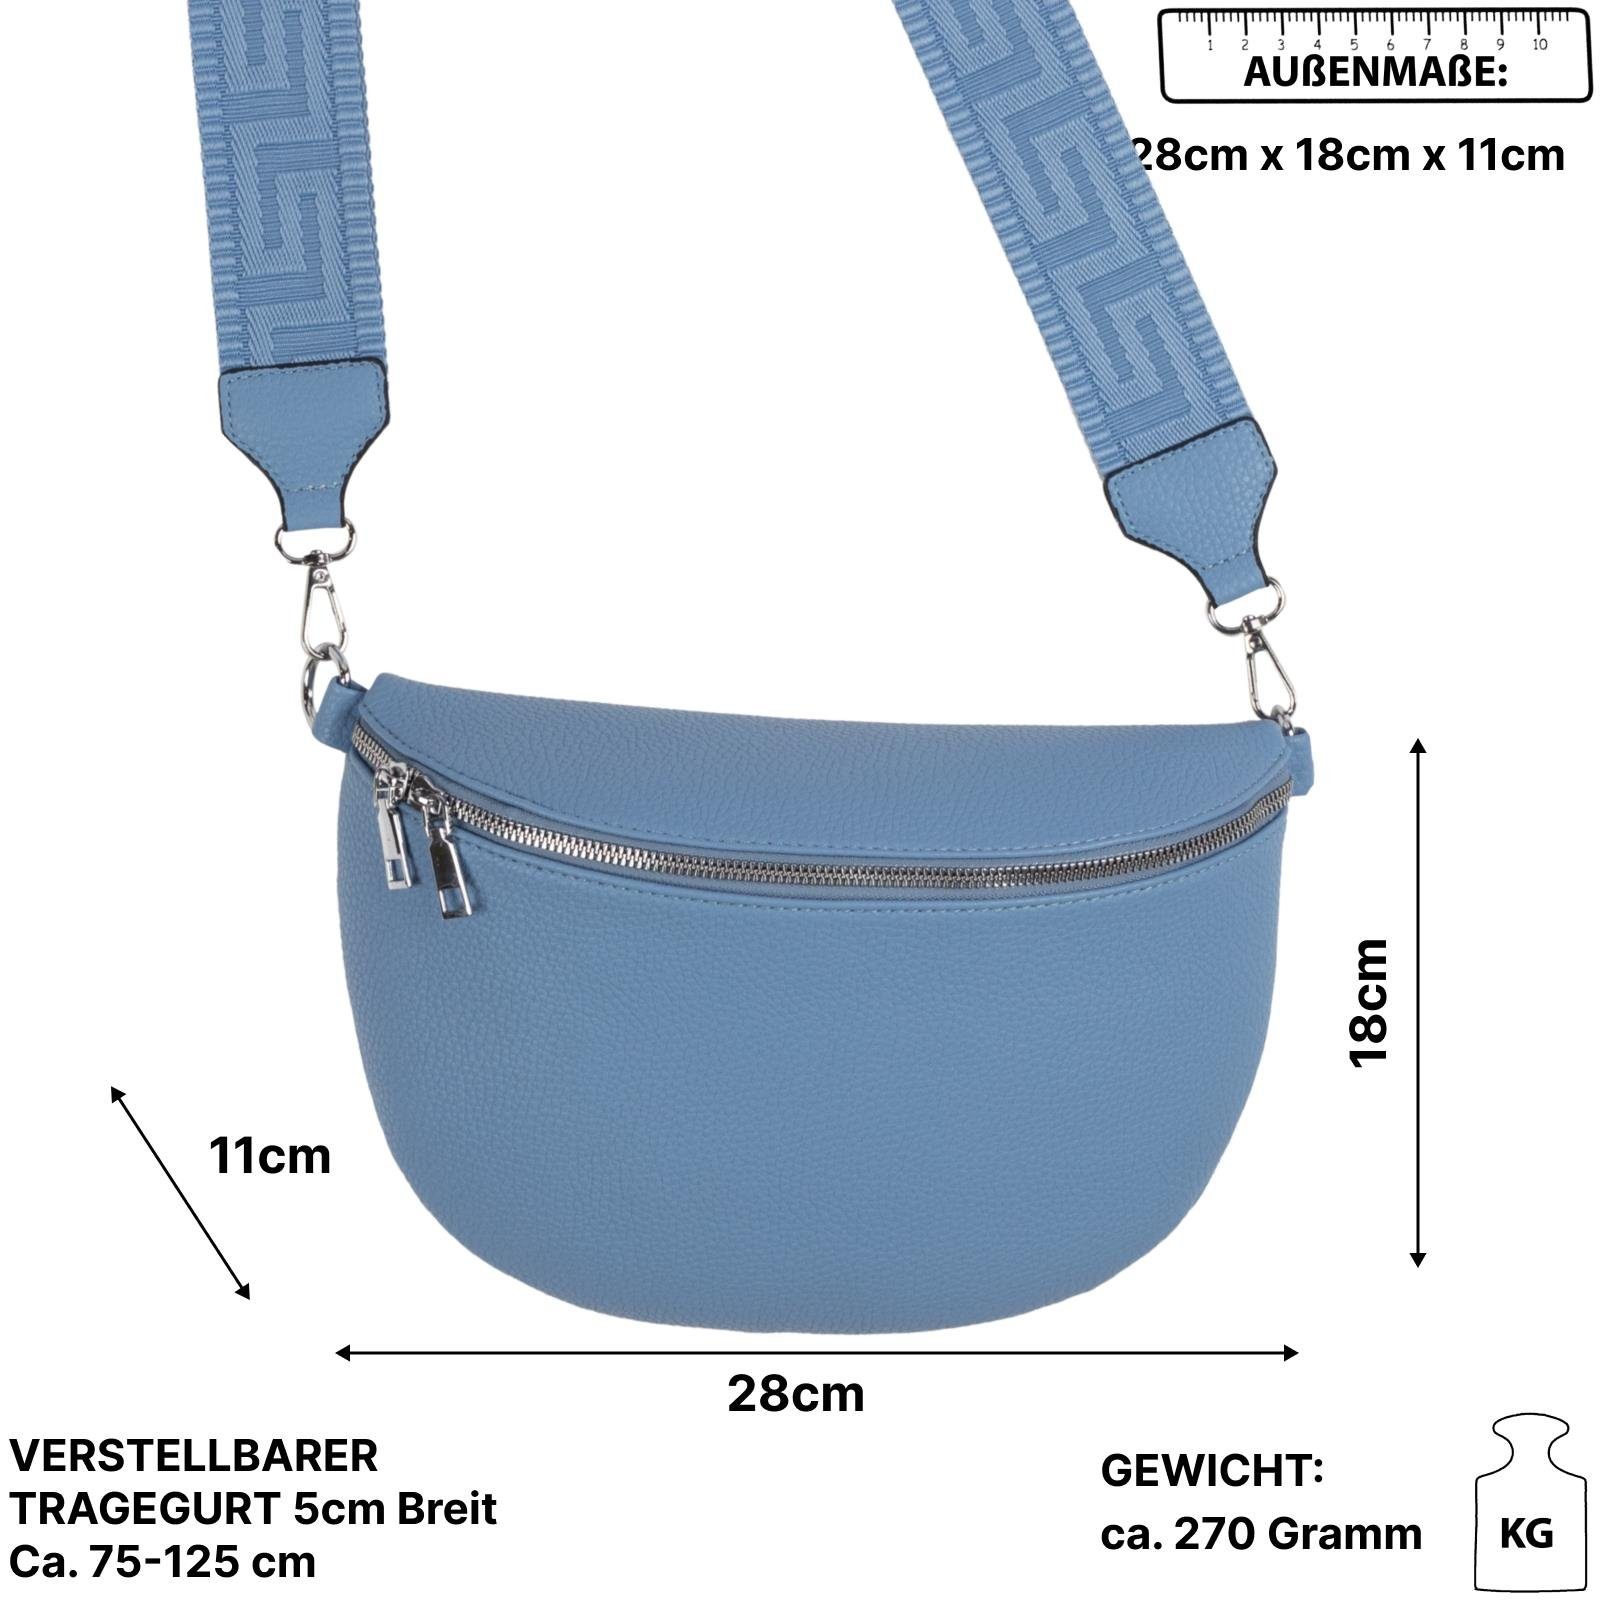 Hüfttasche Gürteltasche EAAKIE Crossbody-Bag Kunstleder Schultertasche, SKY-BLUE XL Italy, Bauchtasche als CrossOver, Umhängetasche Umhängetasche tragbar